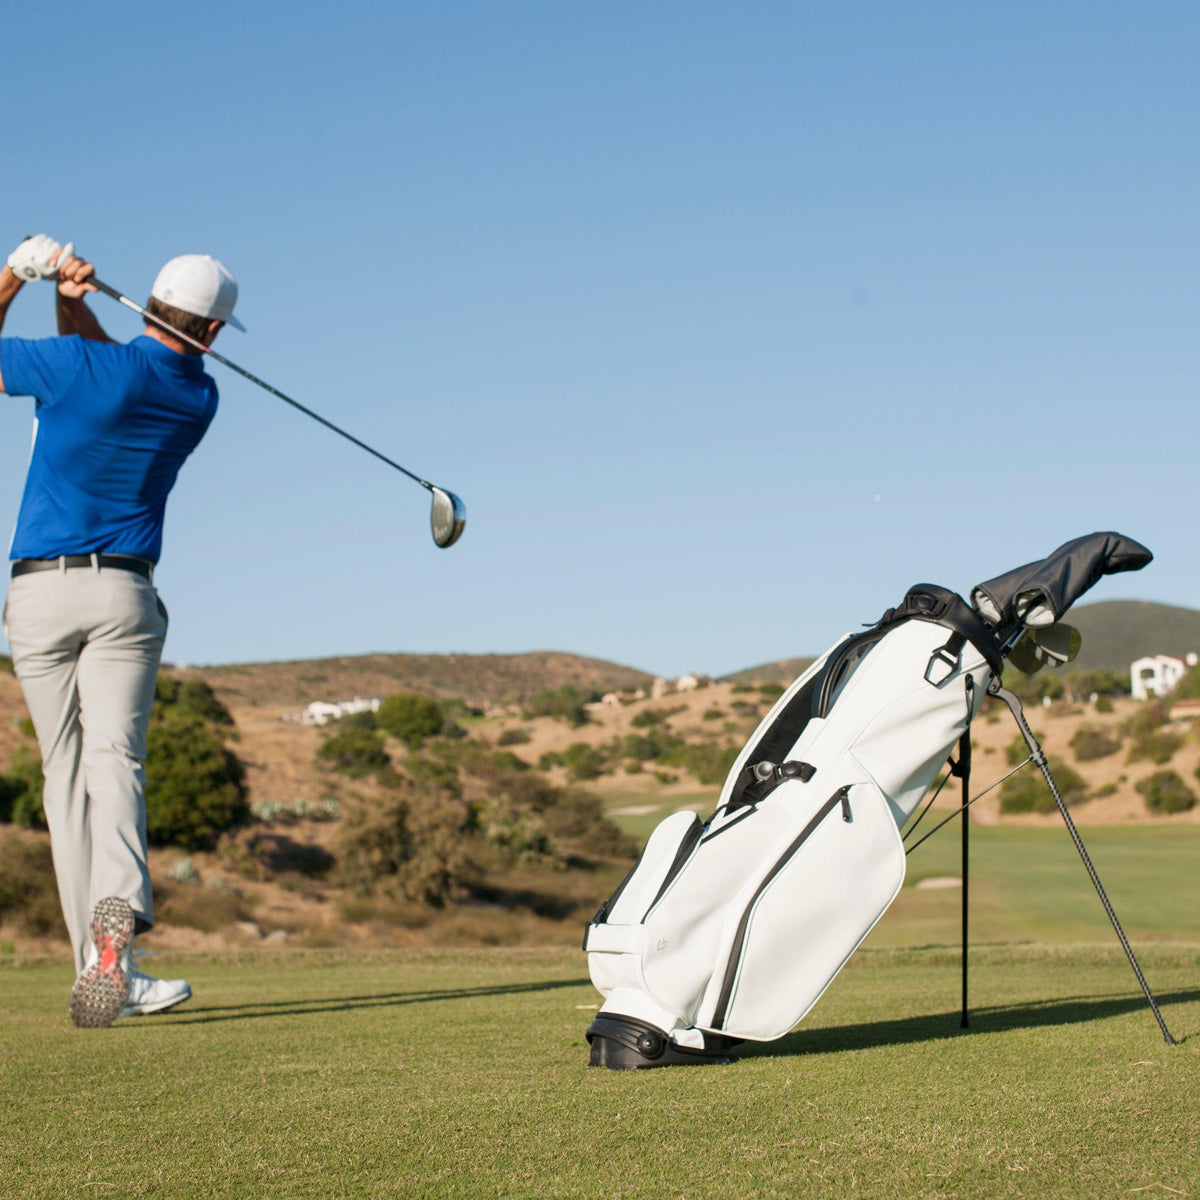 Your Golf Bag Checklist: 30 Essential Items for Golfers